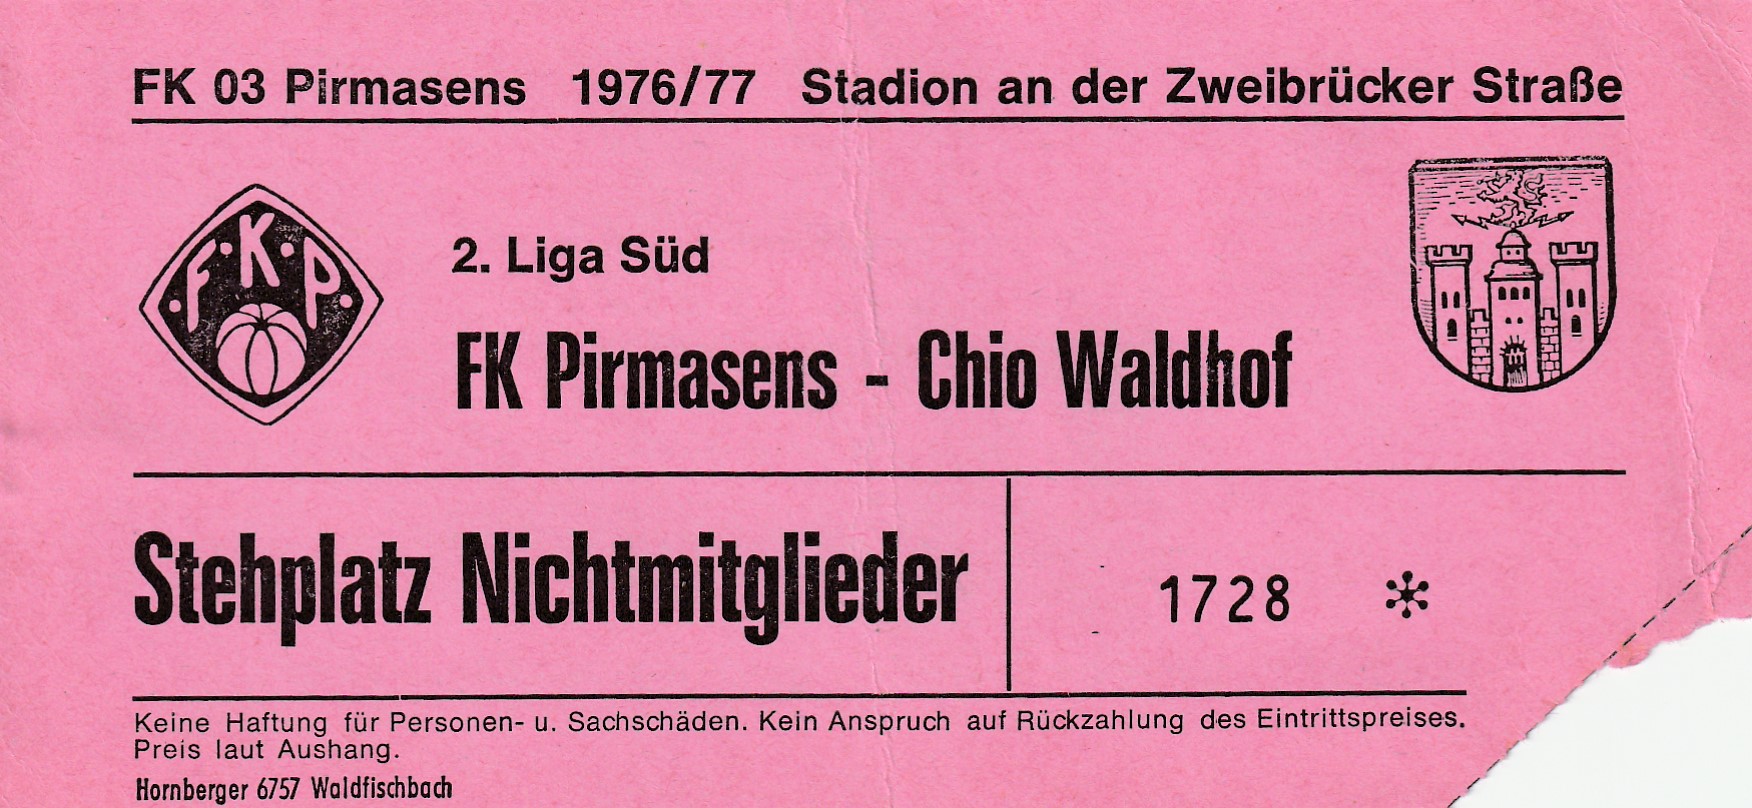 Eintrittskarte 1976-77 FK Pirmasens SV Chio Waldhof.jpg